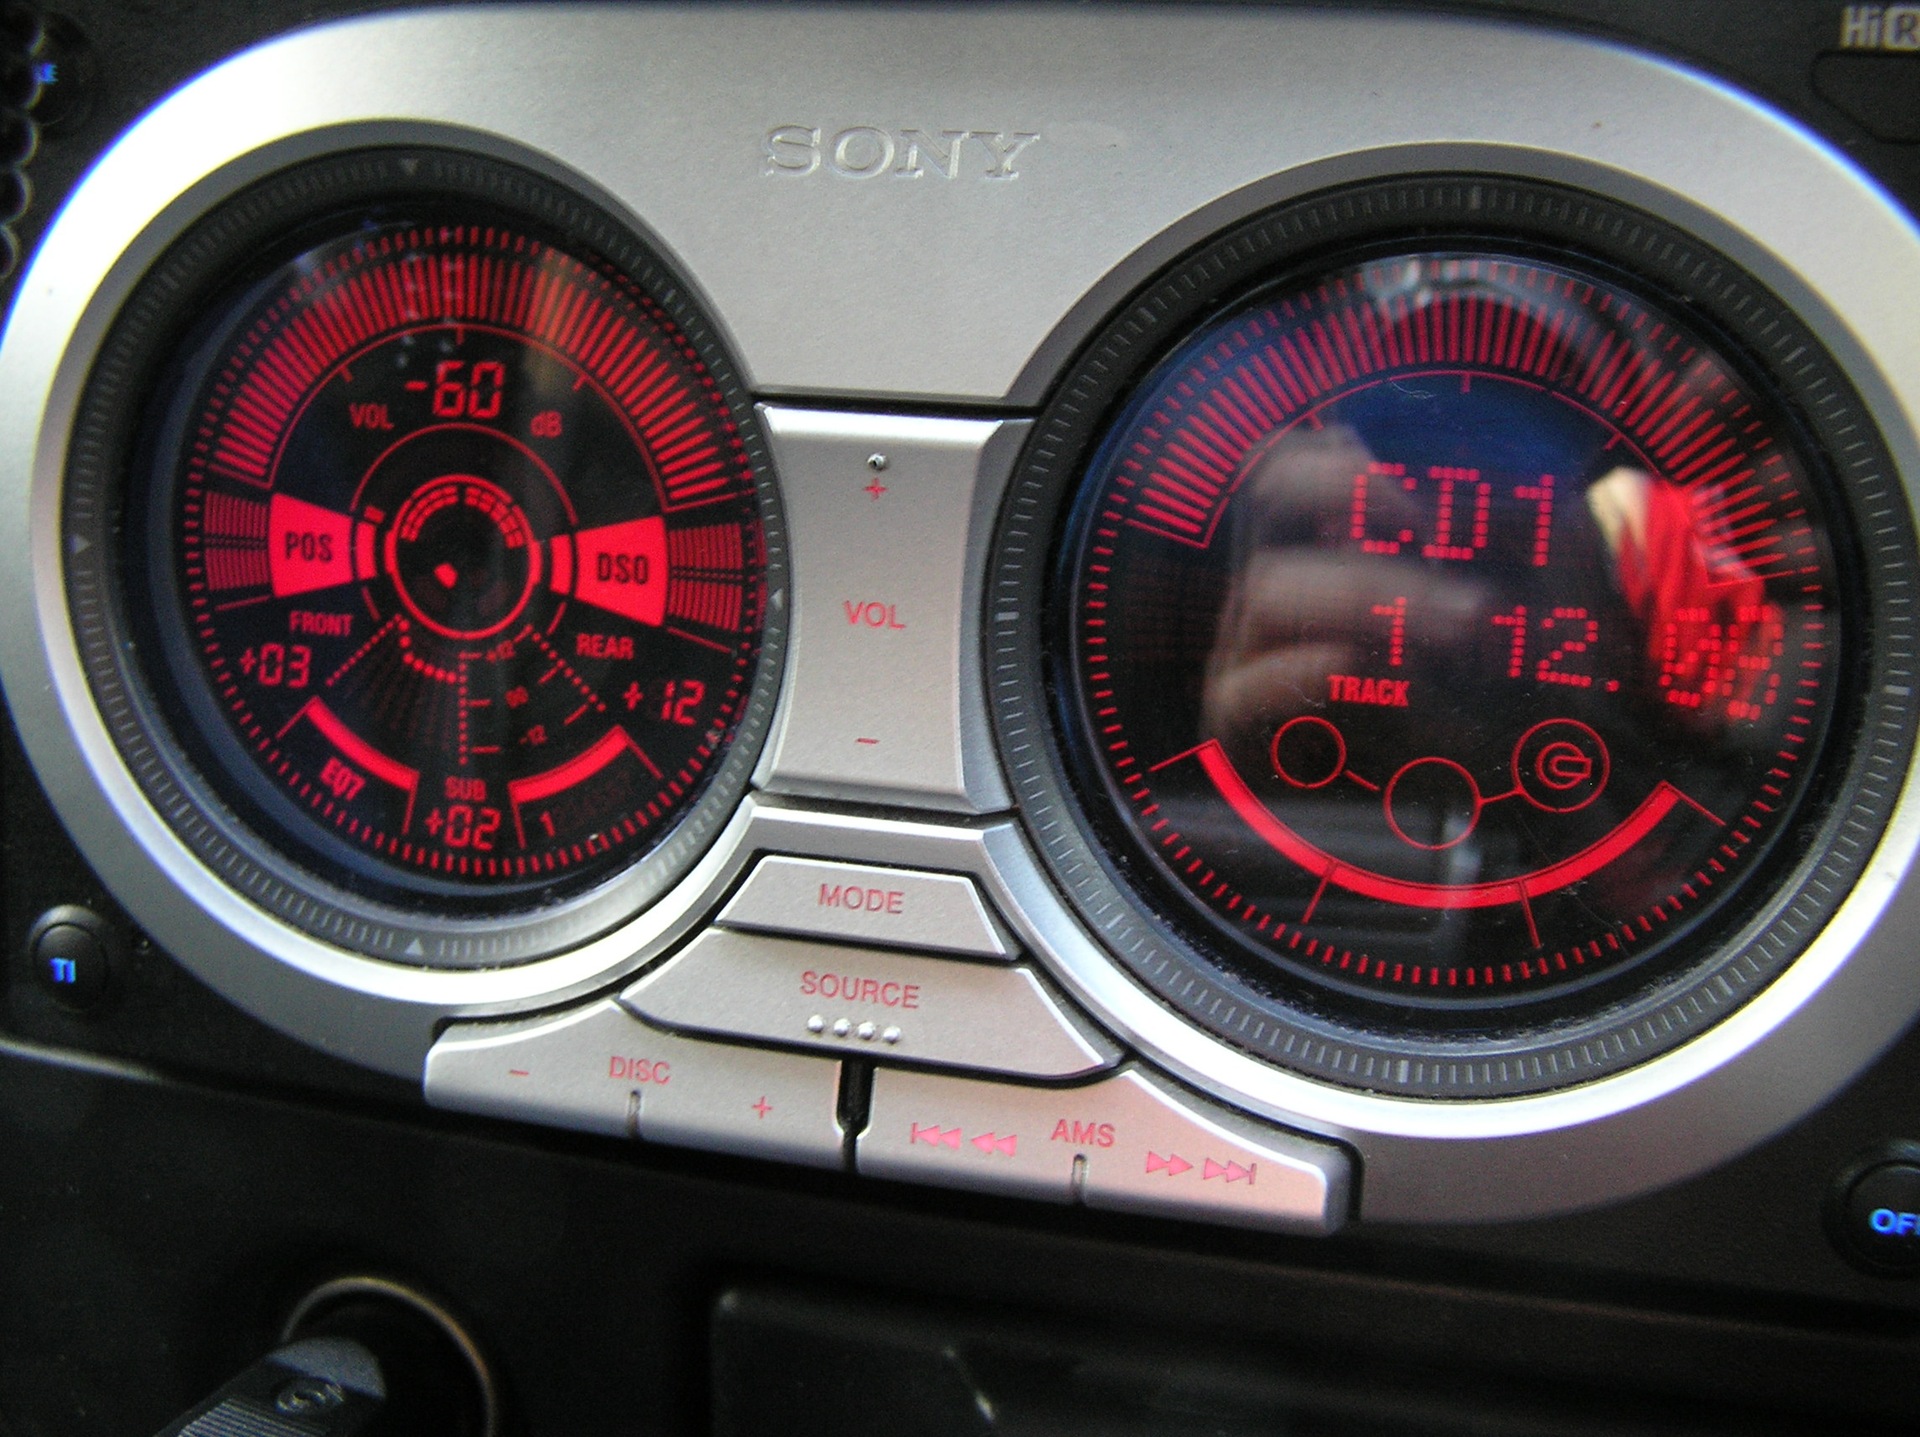 Interesting Japanese radio tape recorder - Toyota Will VS 18 liter 2001